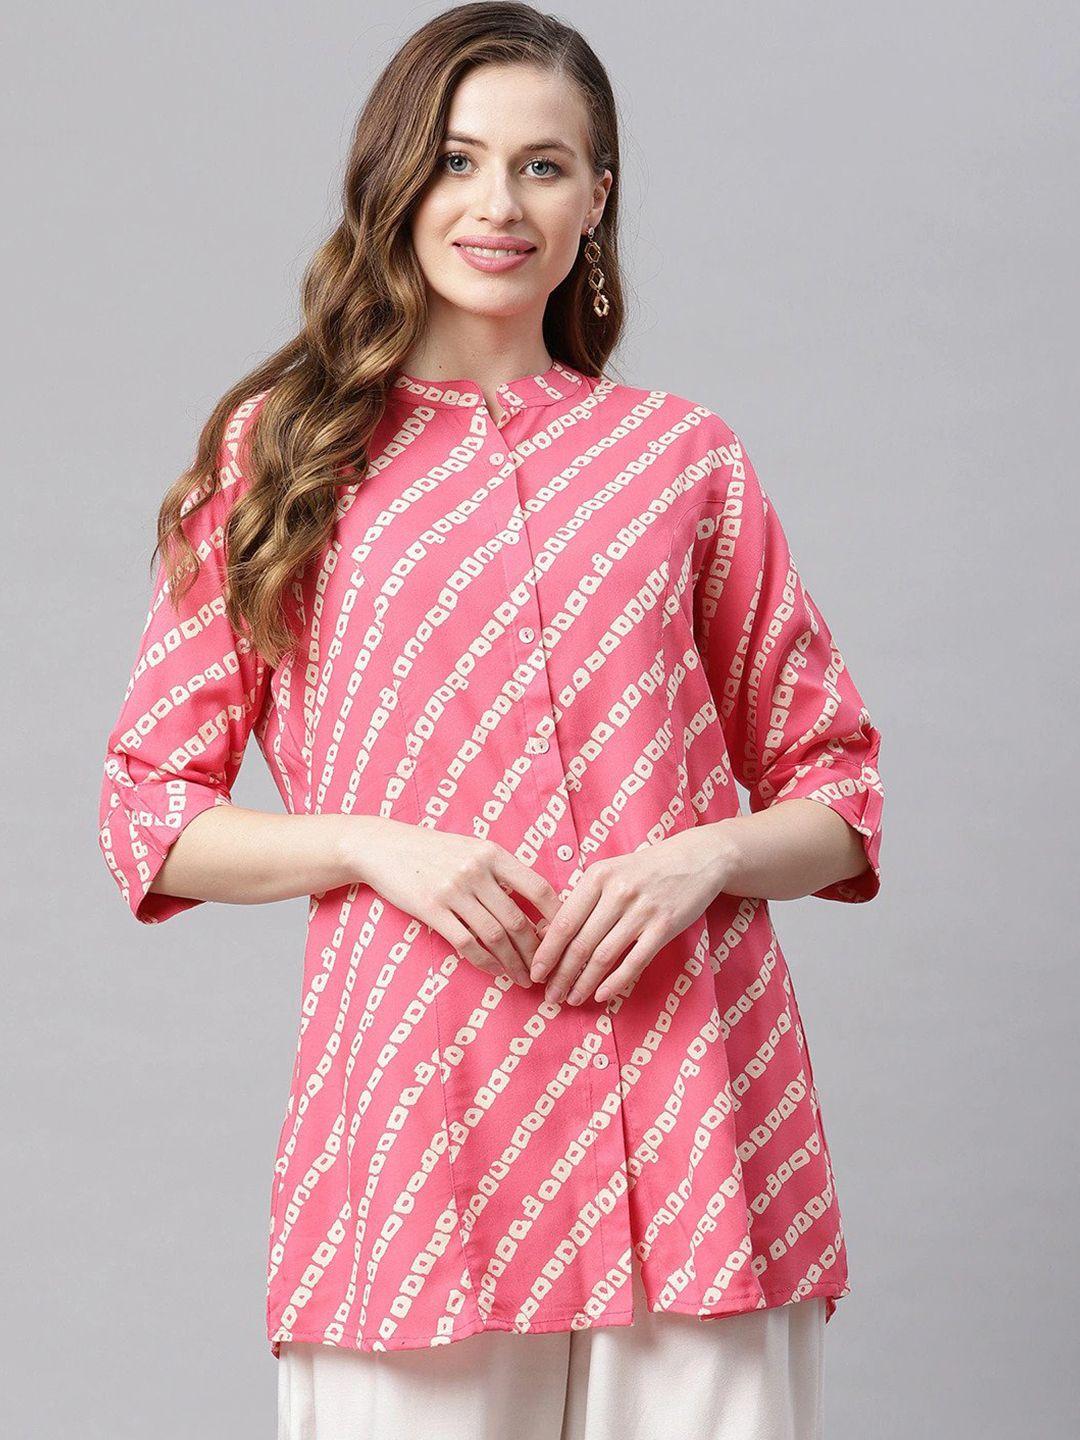 kalini bandhani printed mandarin collar roll-up sleeves longline shirt style top